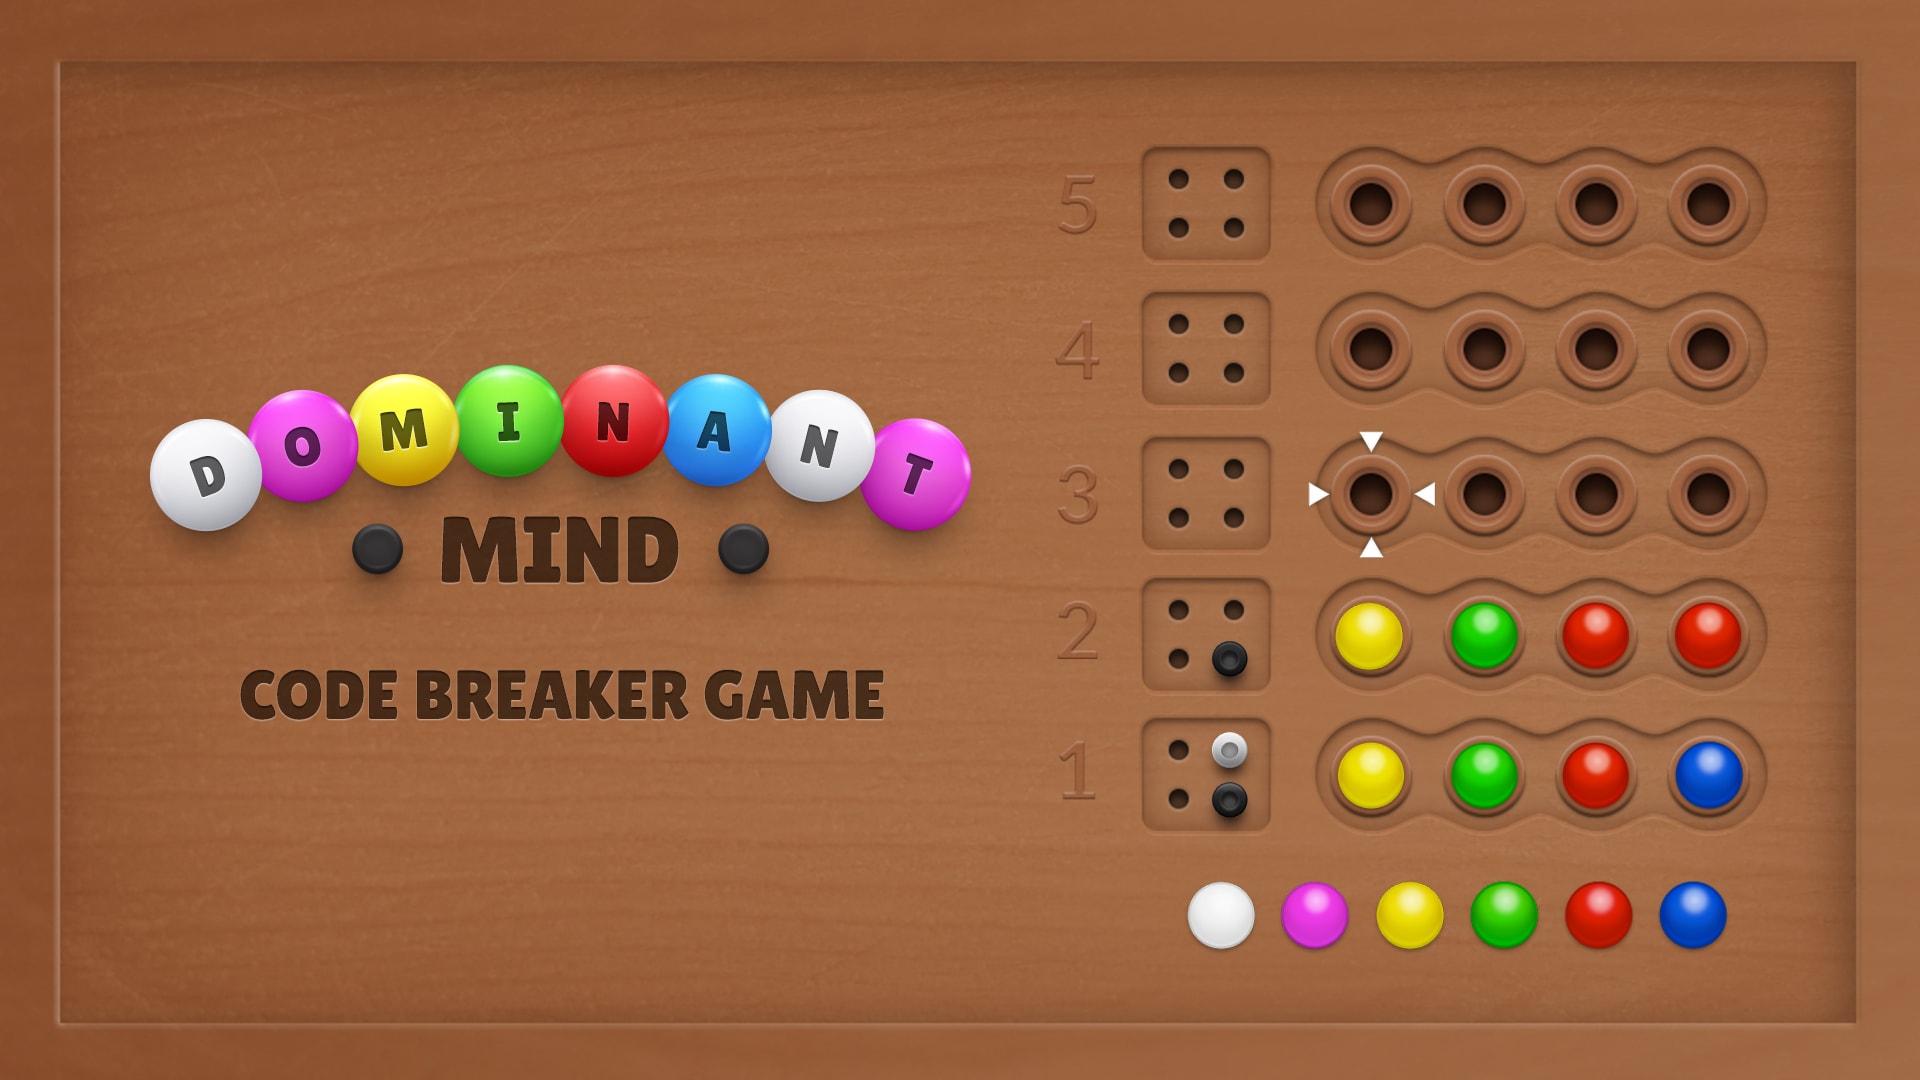 Dominant Mind - Code Breaker Game 